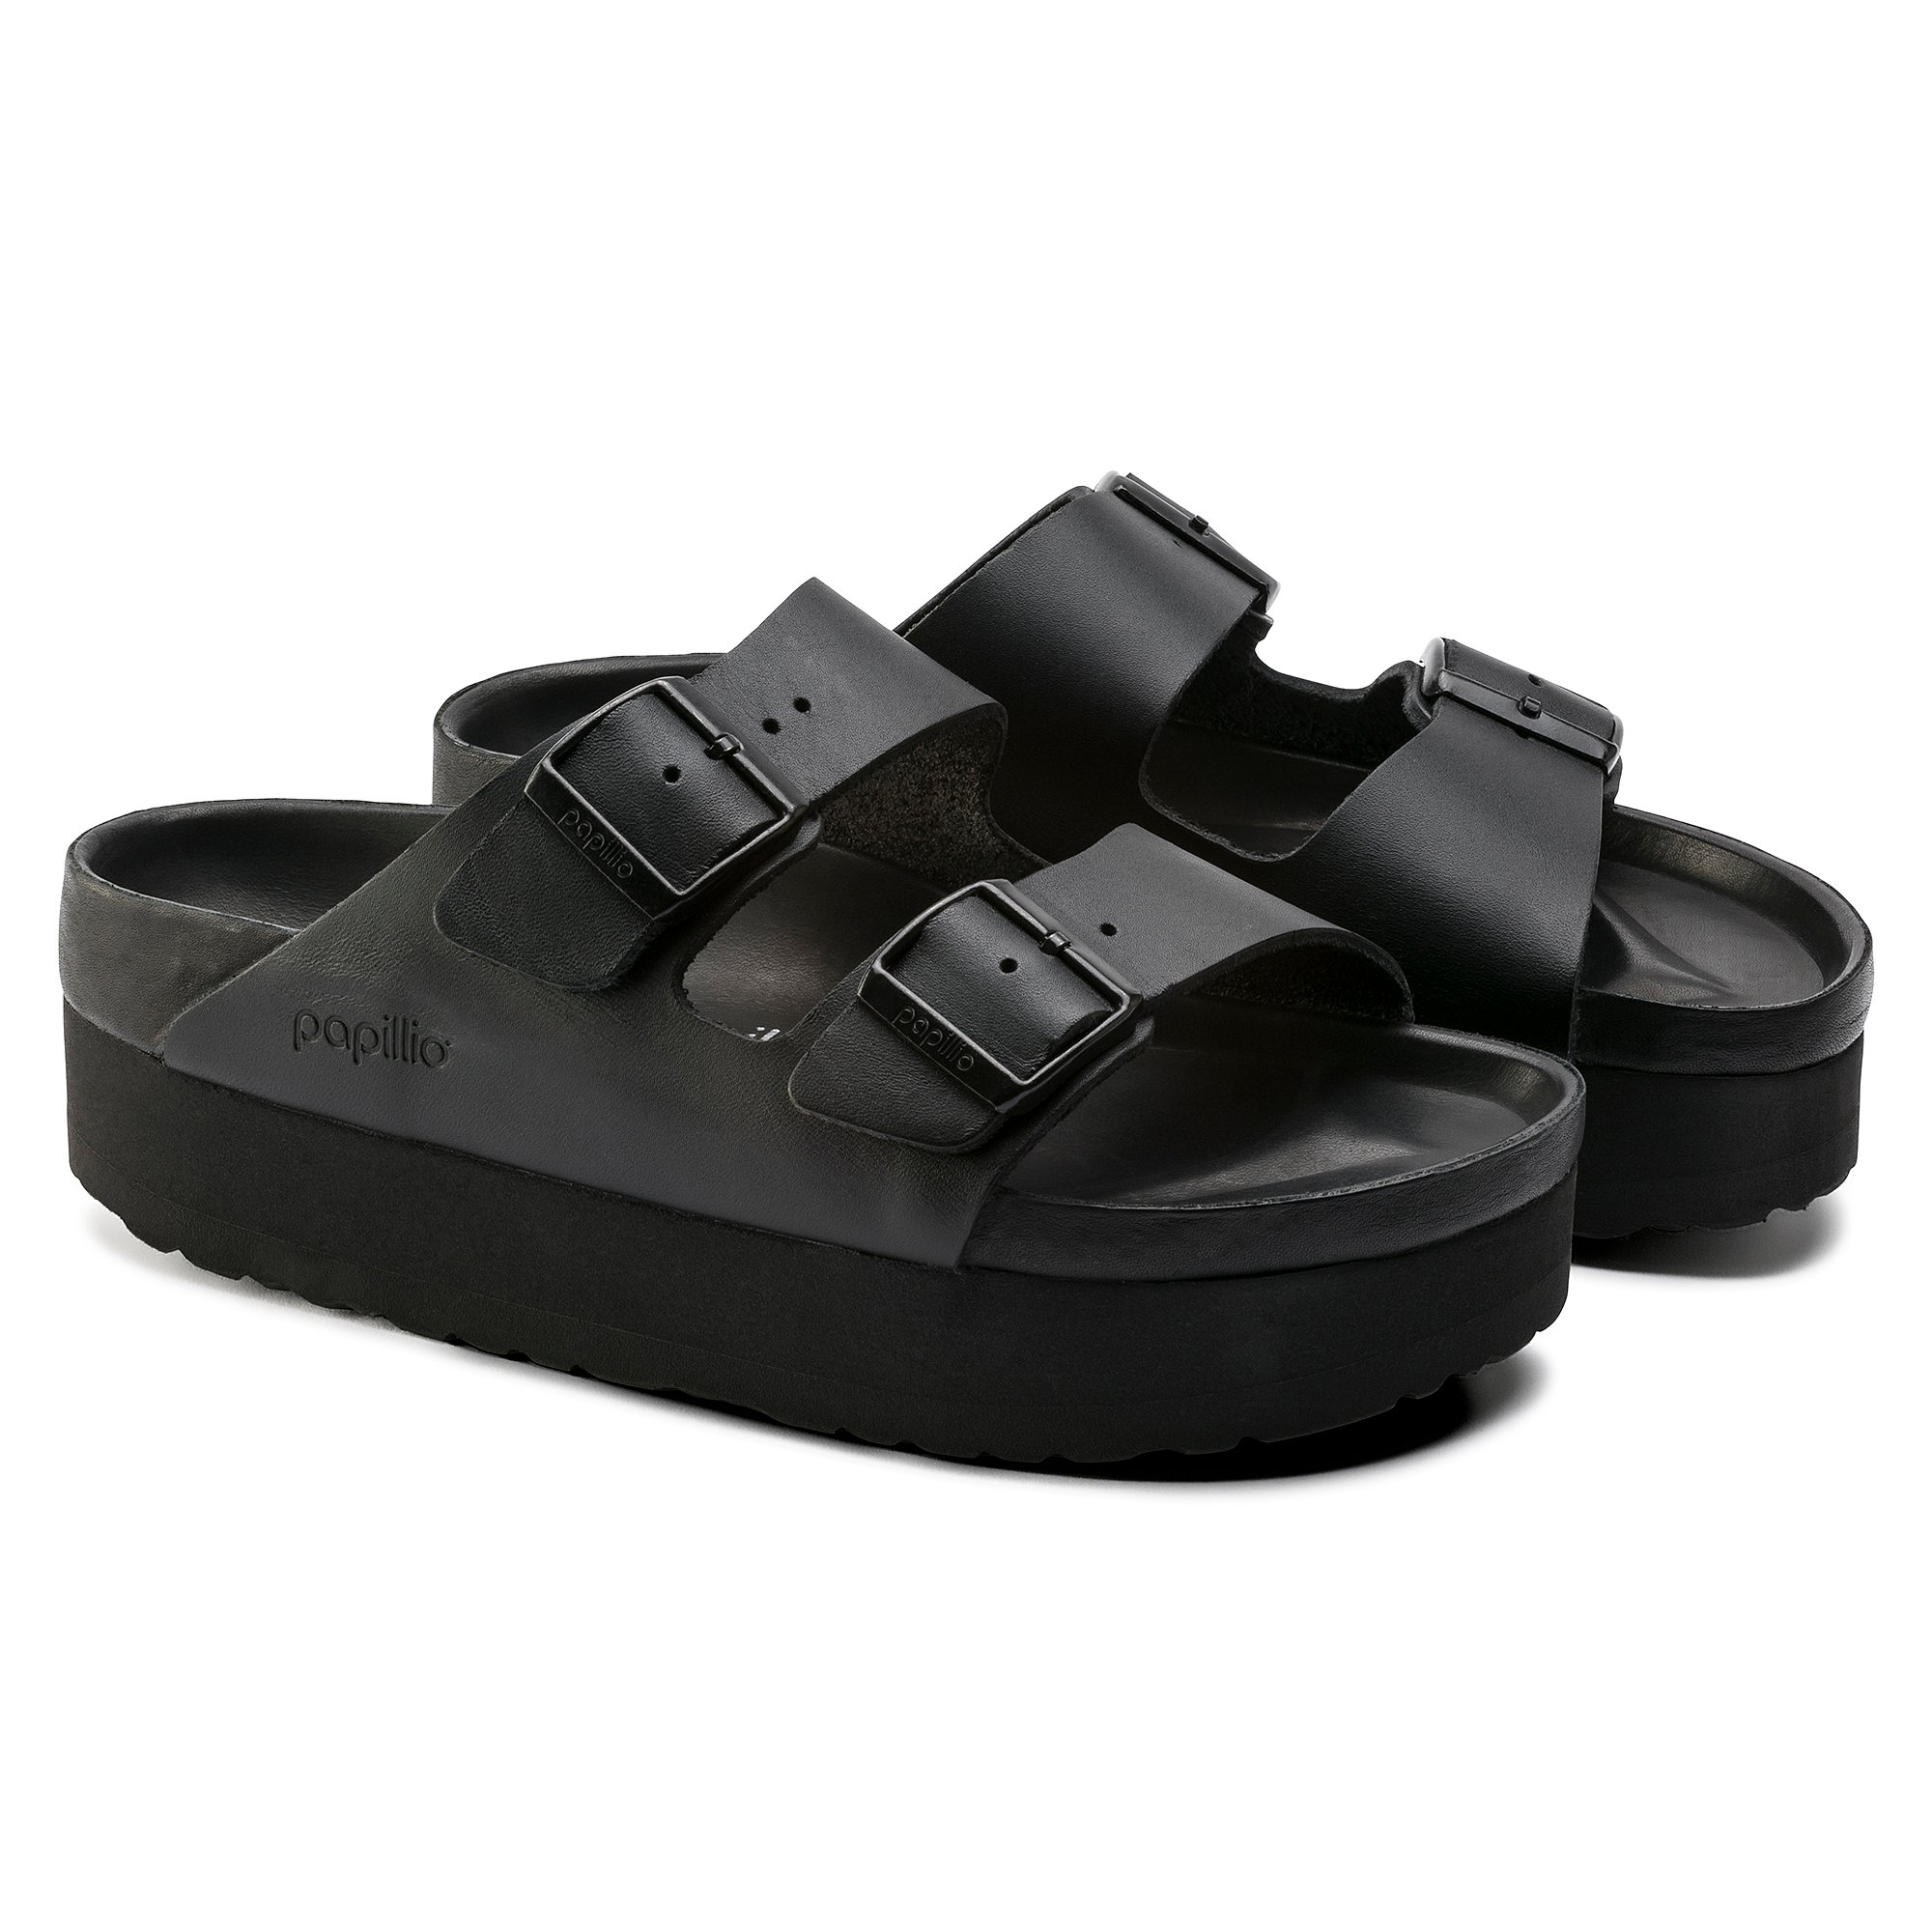 BM Black openwork sandals from Courtois - KeeShoes-sgquangbinhtourist.com.vn